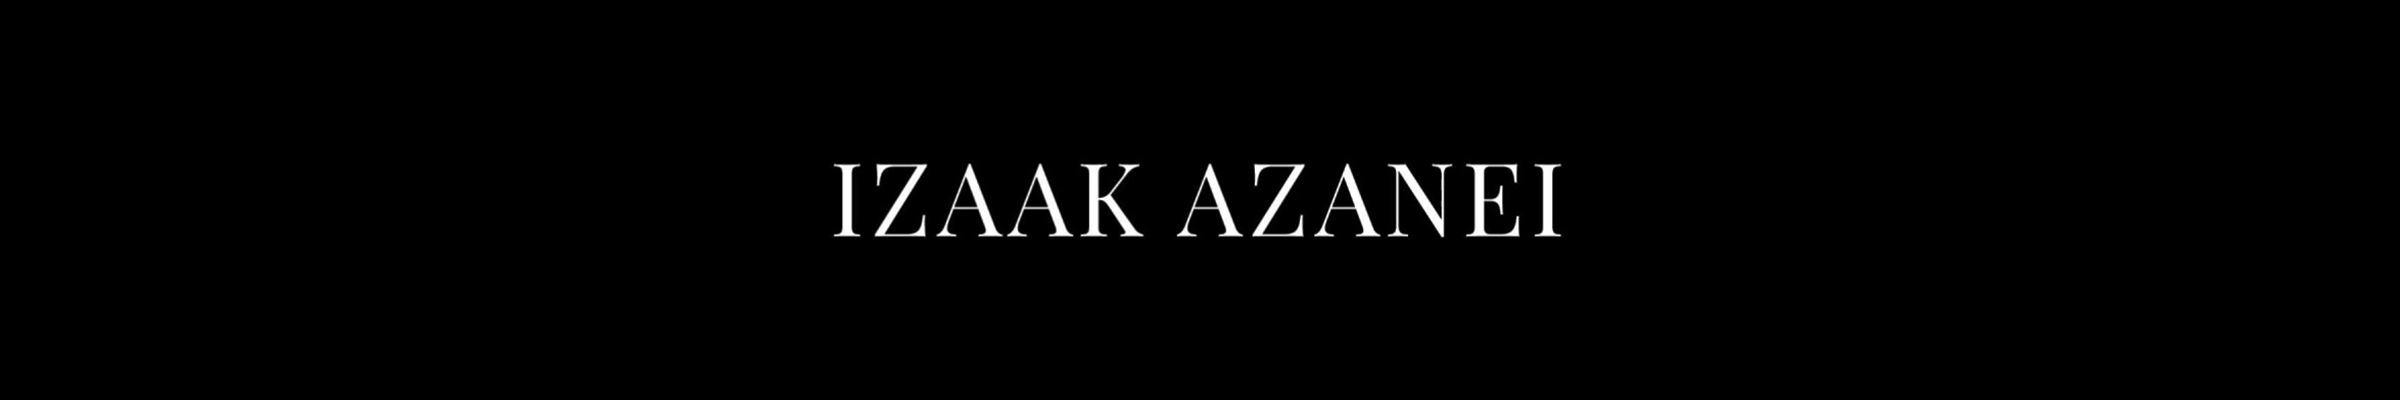 izaak-azanei-banner